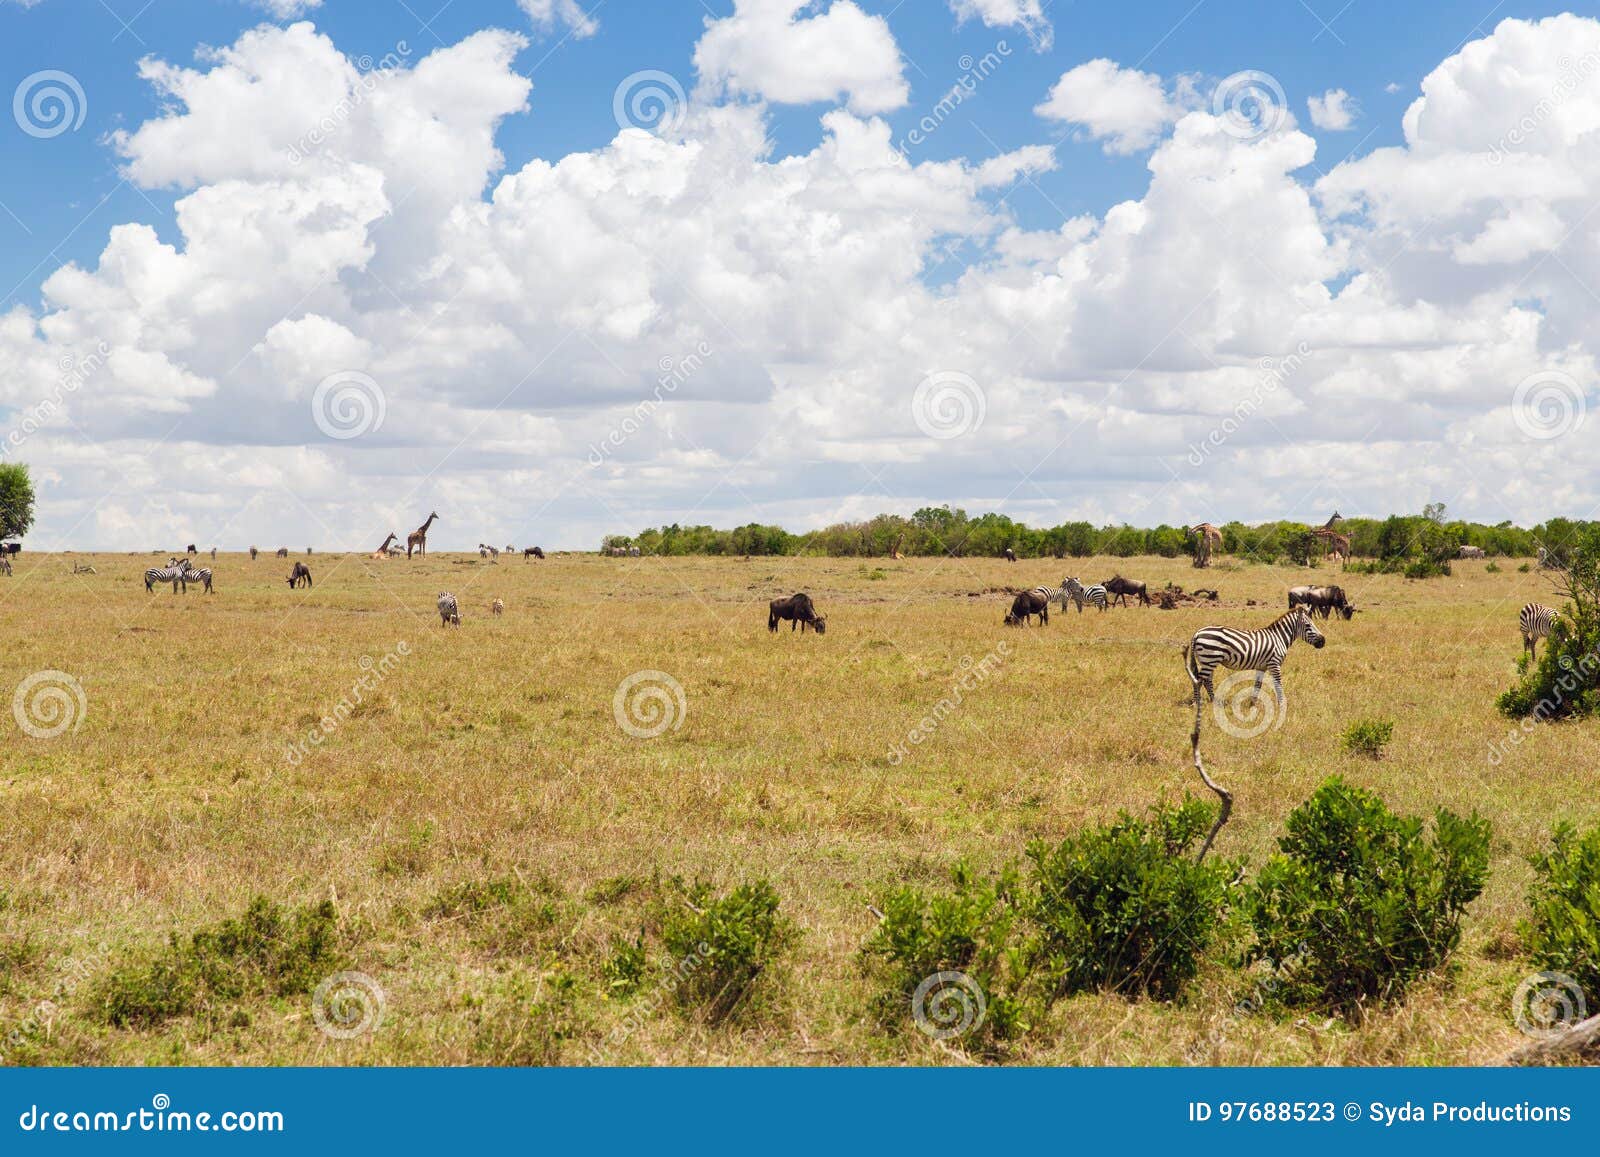 group of herbivore animals in savannah at africa